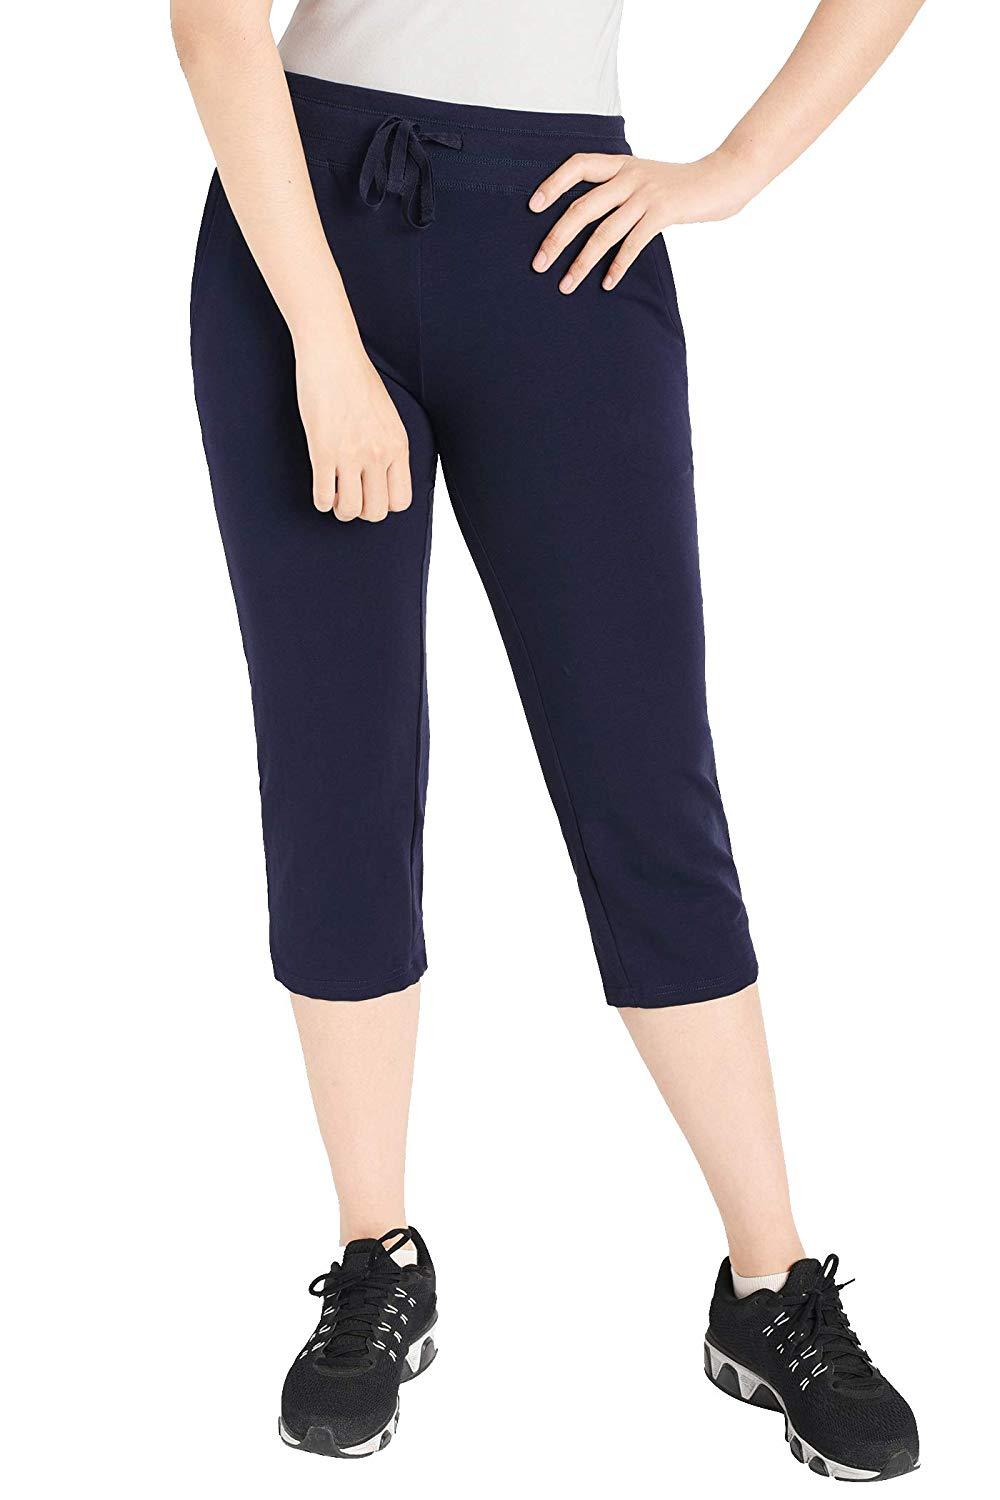 Latuza Women's Sleepwear Tops with Capri Pants Pajama Sets S Dark Gray at   Women's Clothing store